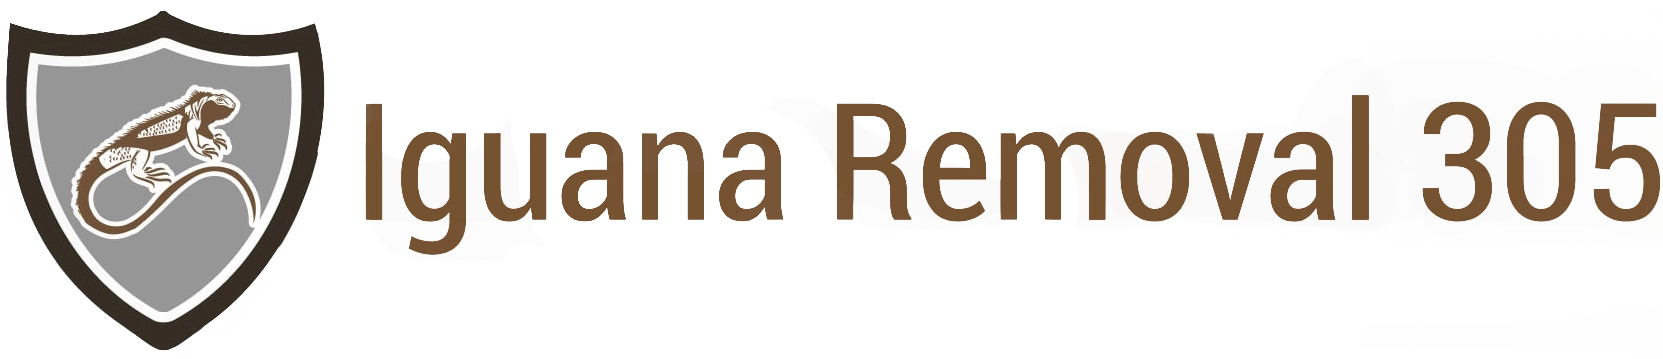 Iguana Removal 305 Logo